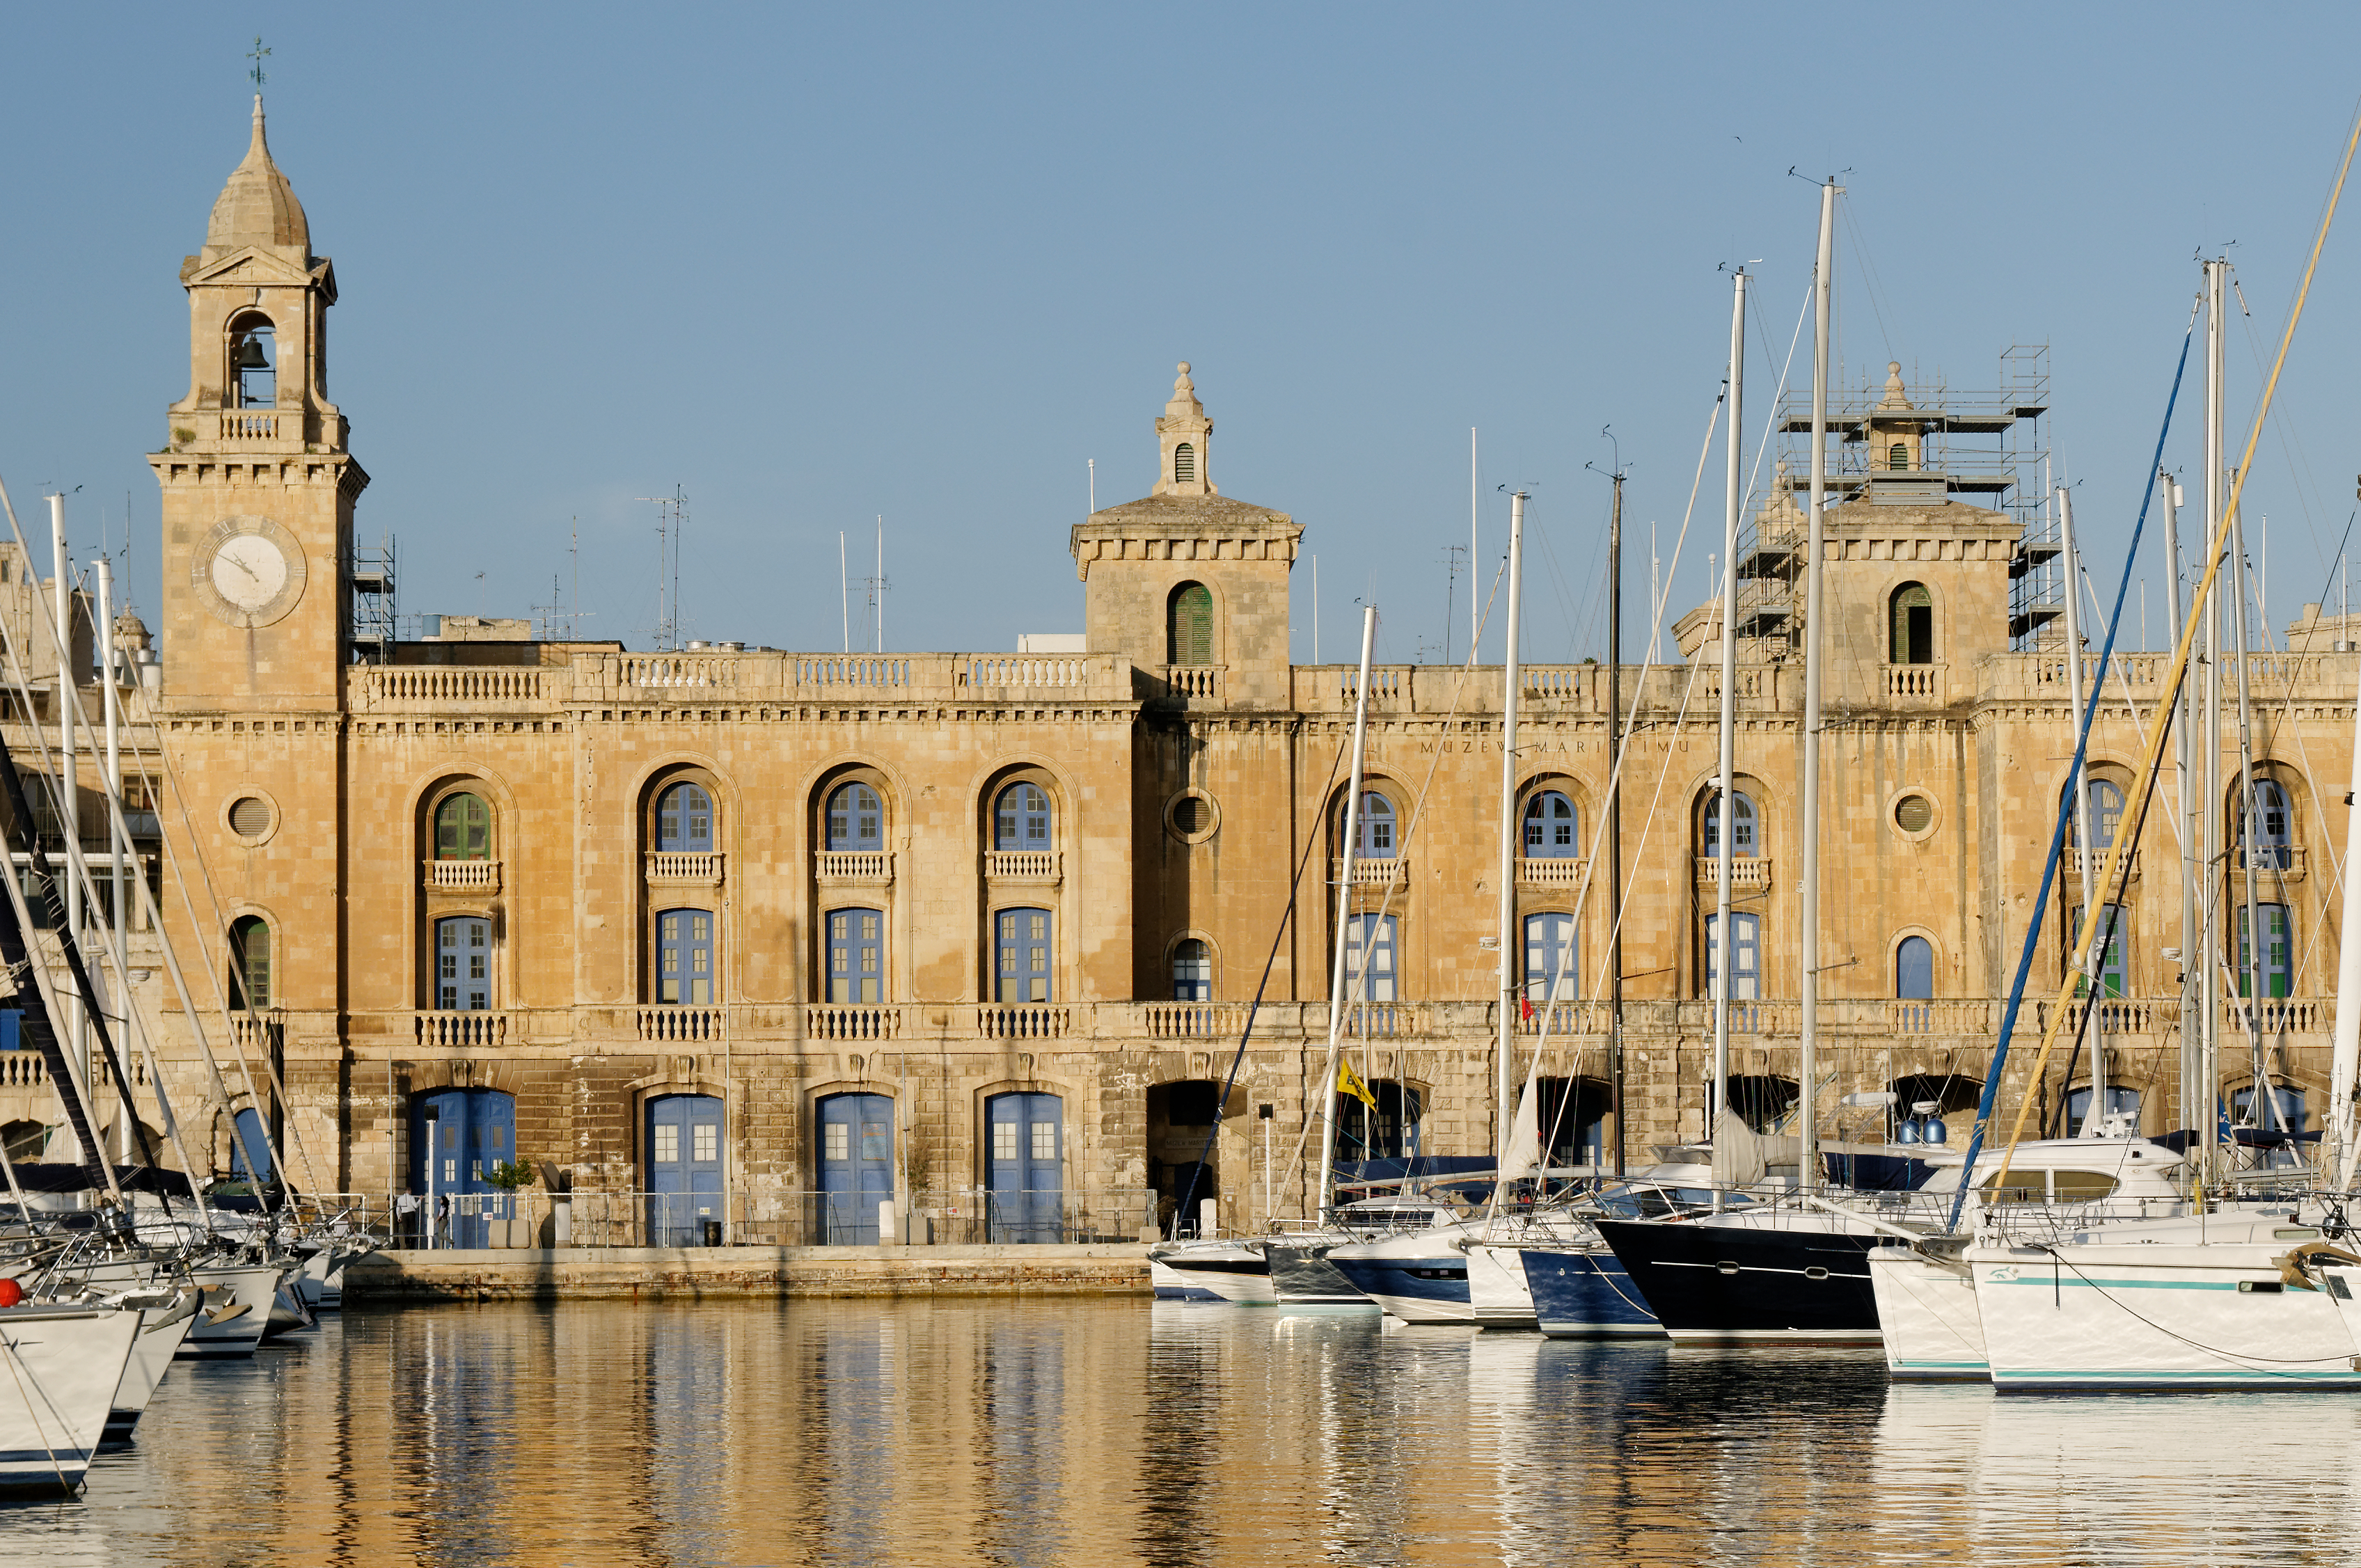 Malta Maritime Museum from Senglea